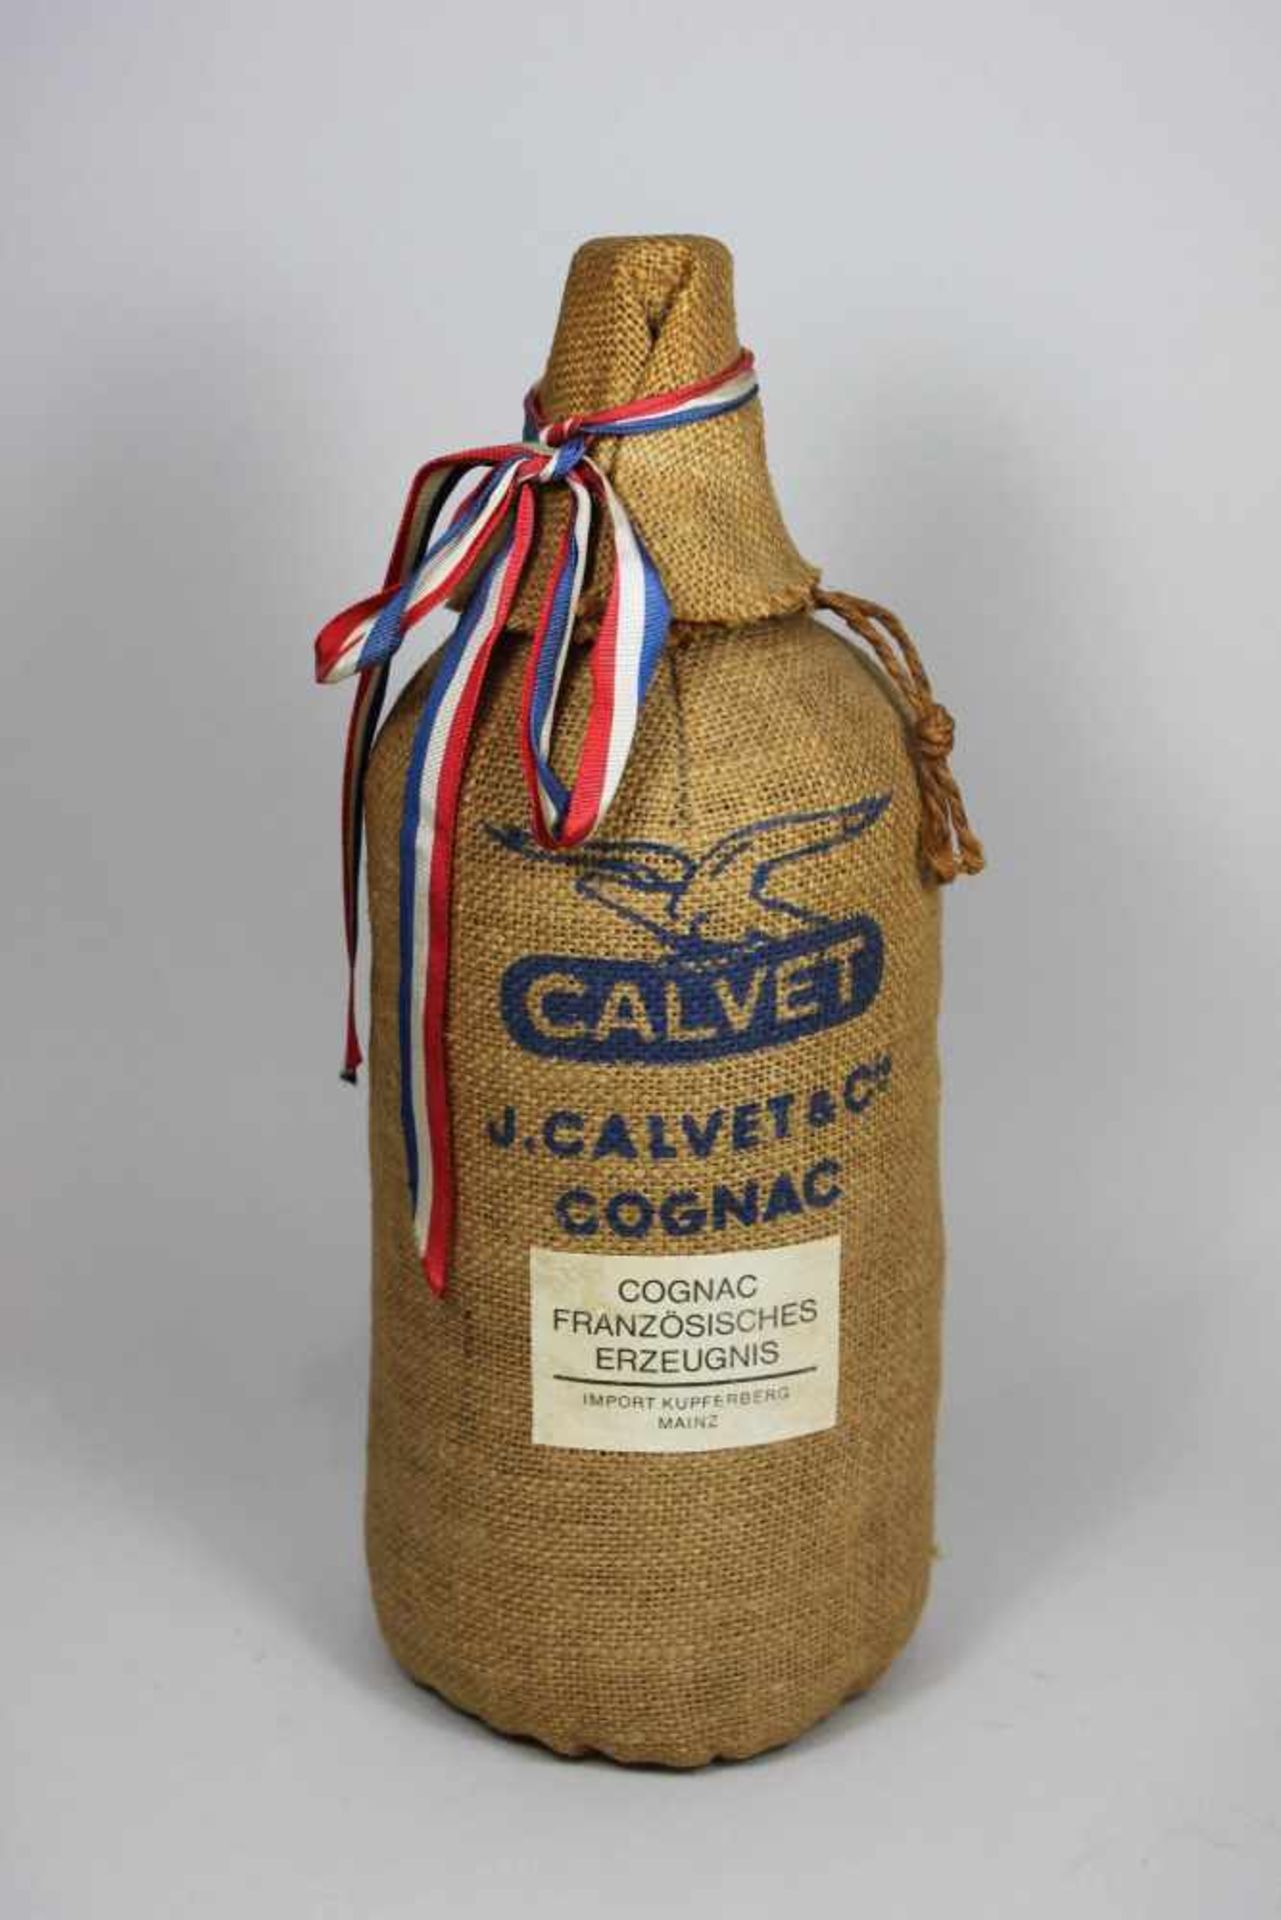 Calvet, J. Calvet and Cie, Cognac, Französisches Erzeugnis, Import Kupferberg Mainz, Flasche